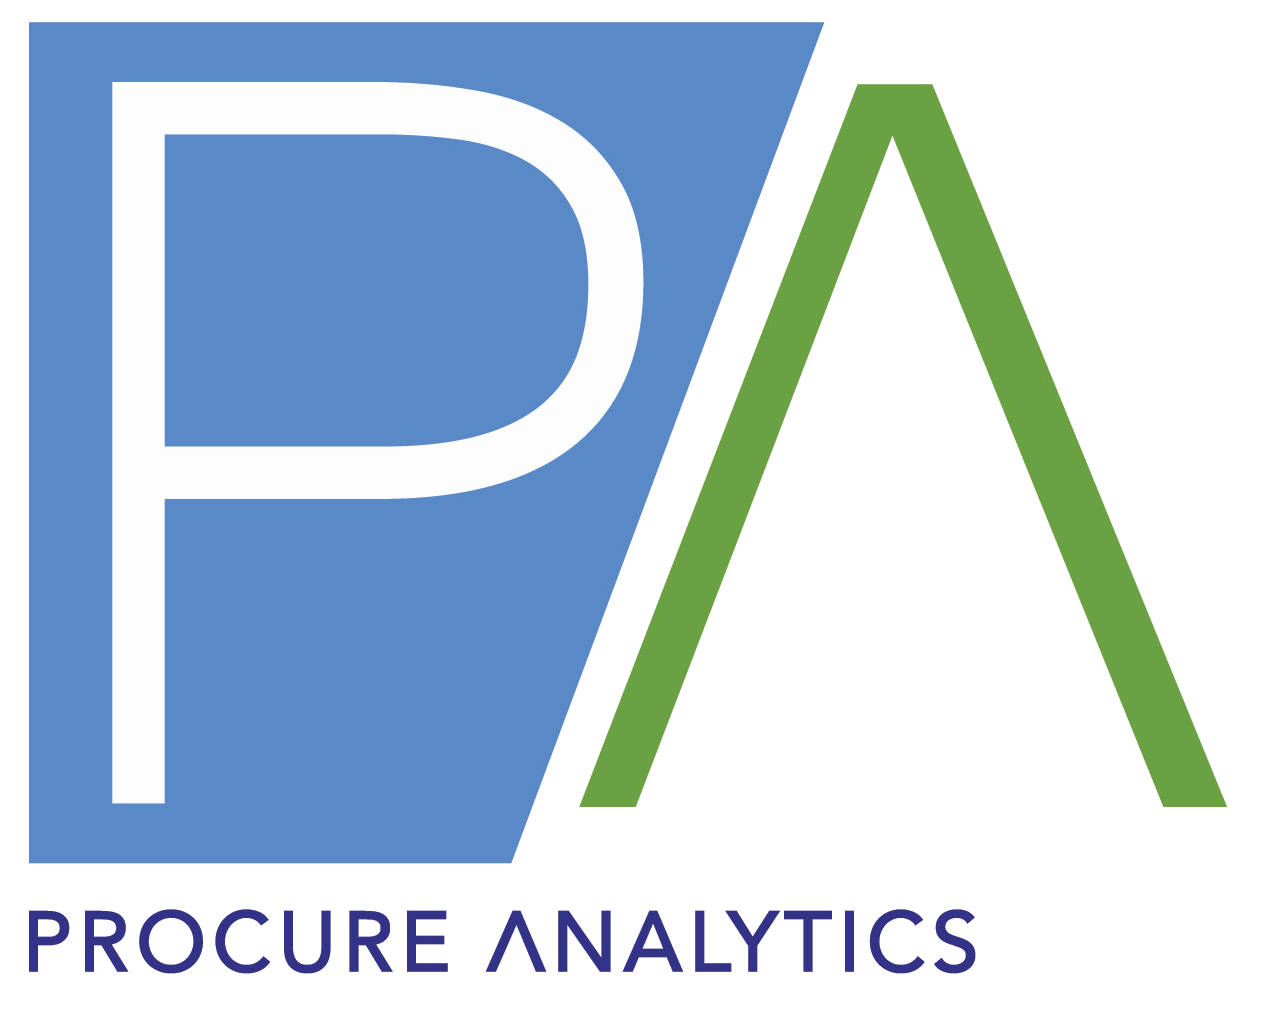 Procurement Advisors Announces Rebranding, Changes Name to Procure Analytics